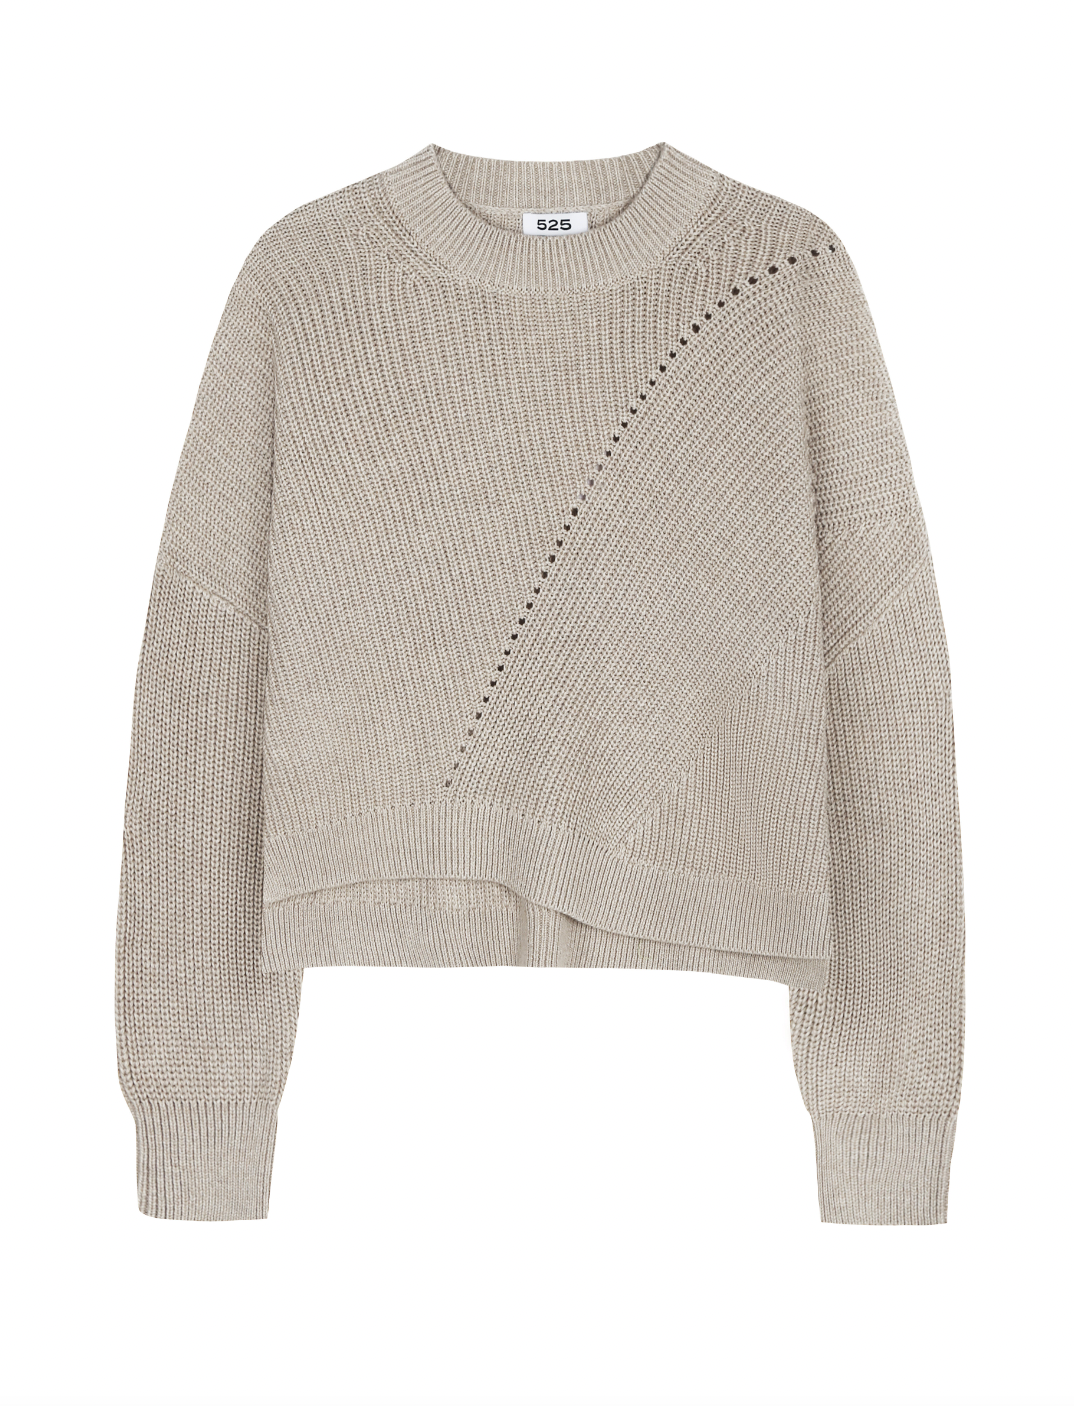 FINAL SALE- Charli Sweater